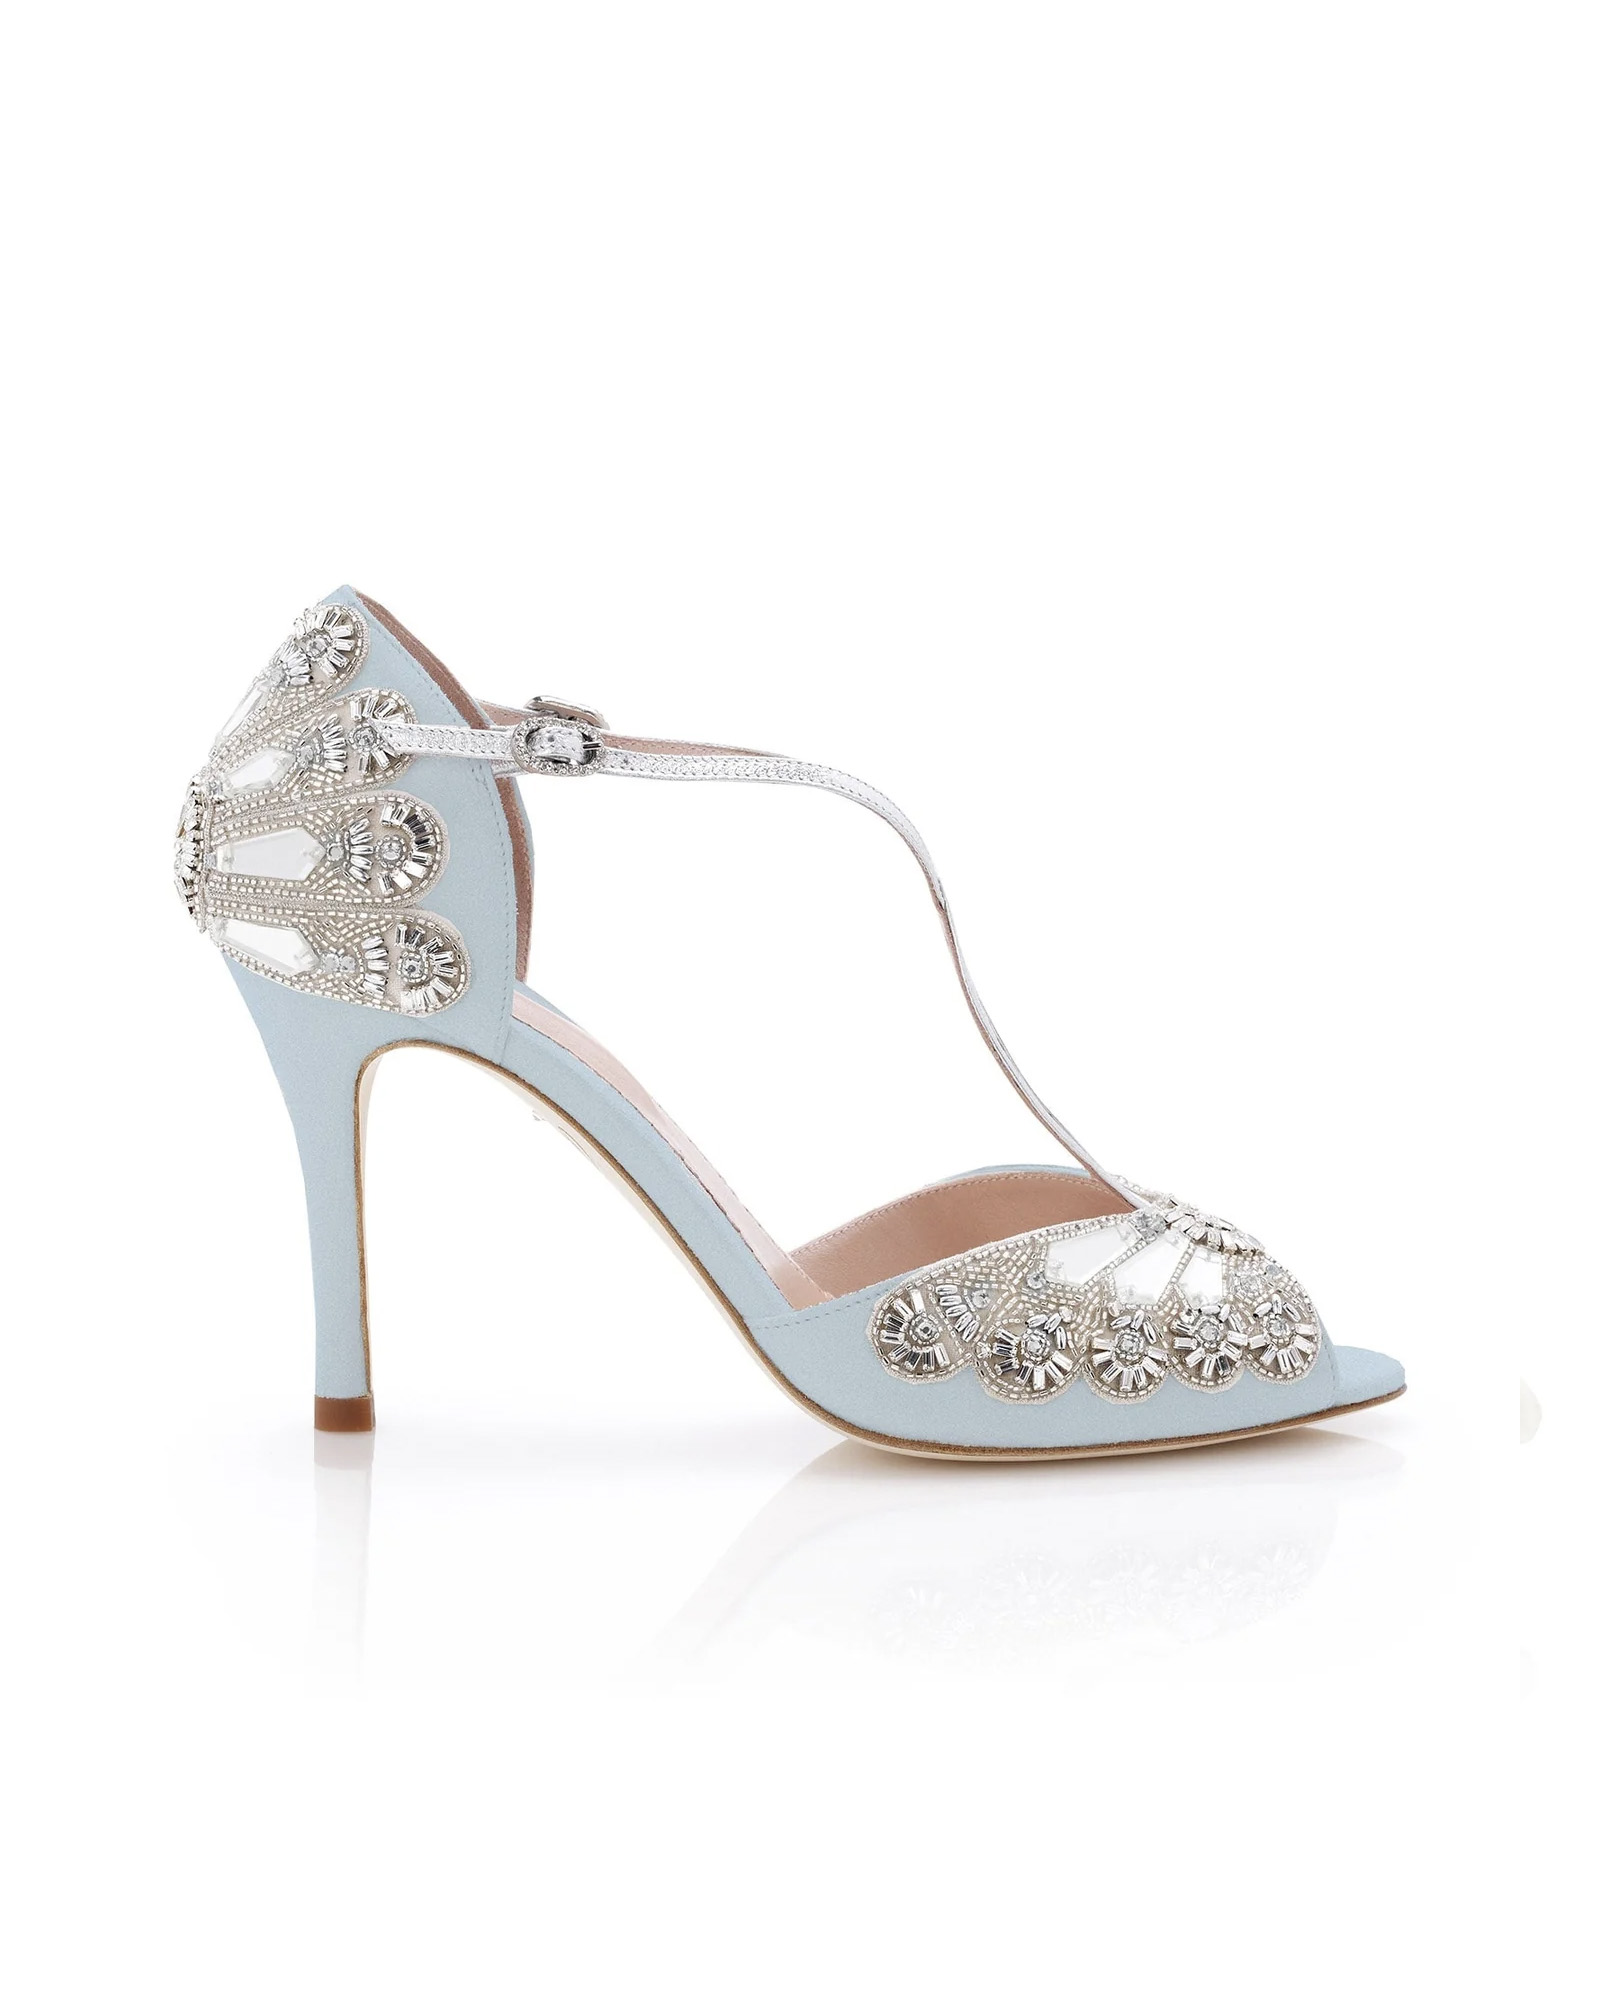 Bluebell High Heel blue wedding shoes Emmy London.jpg